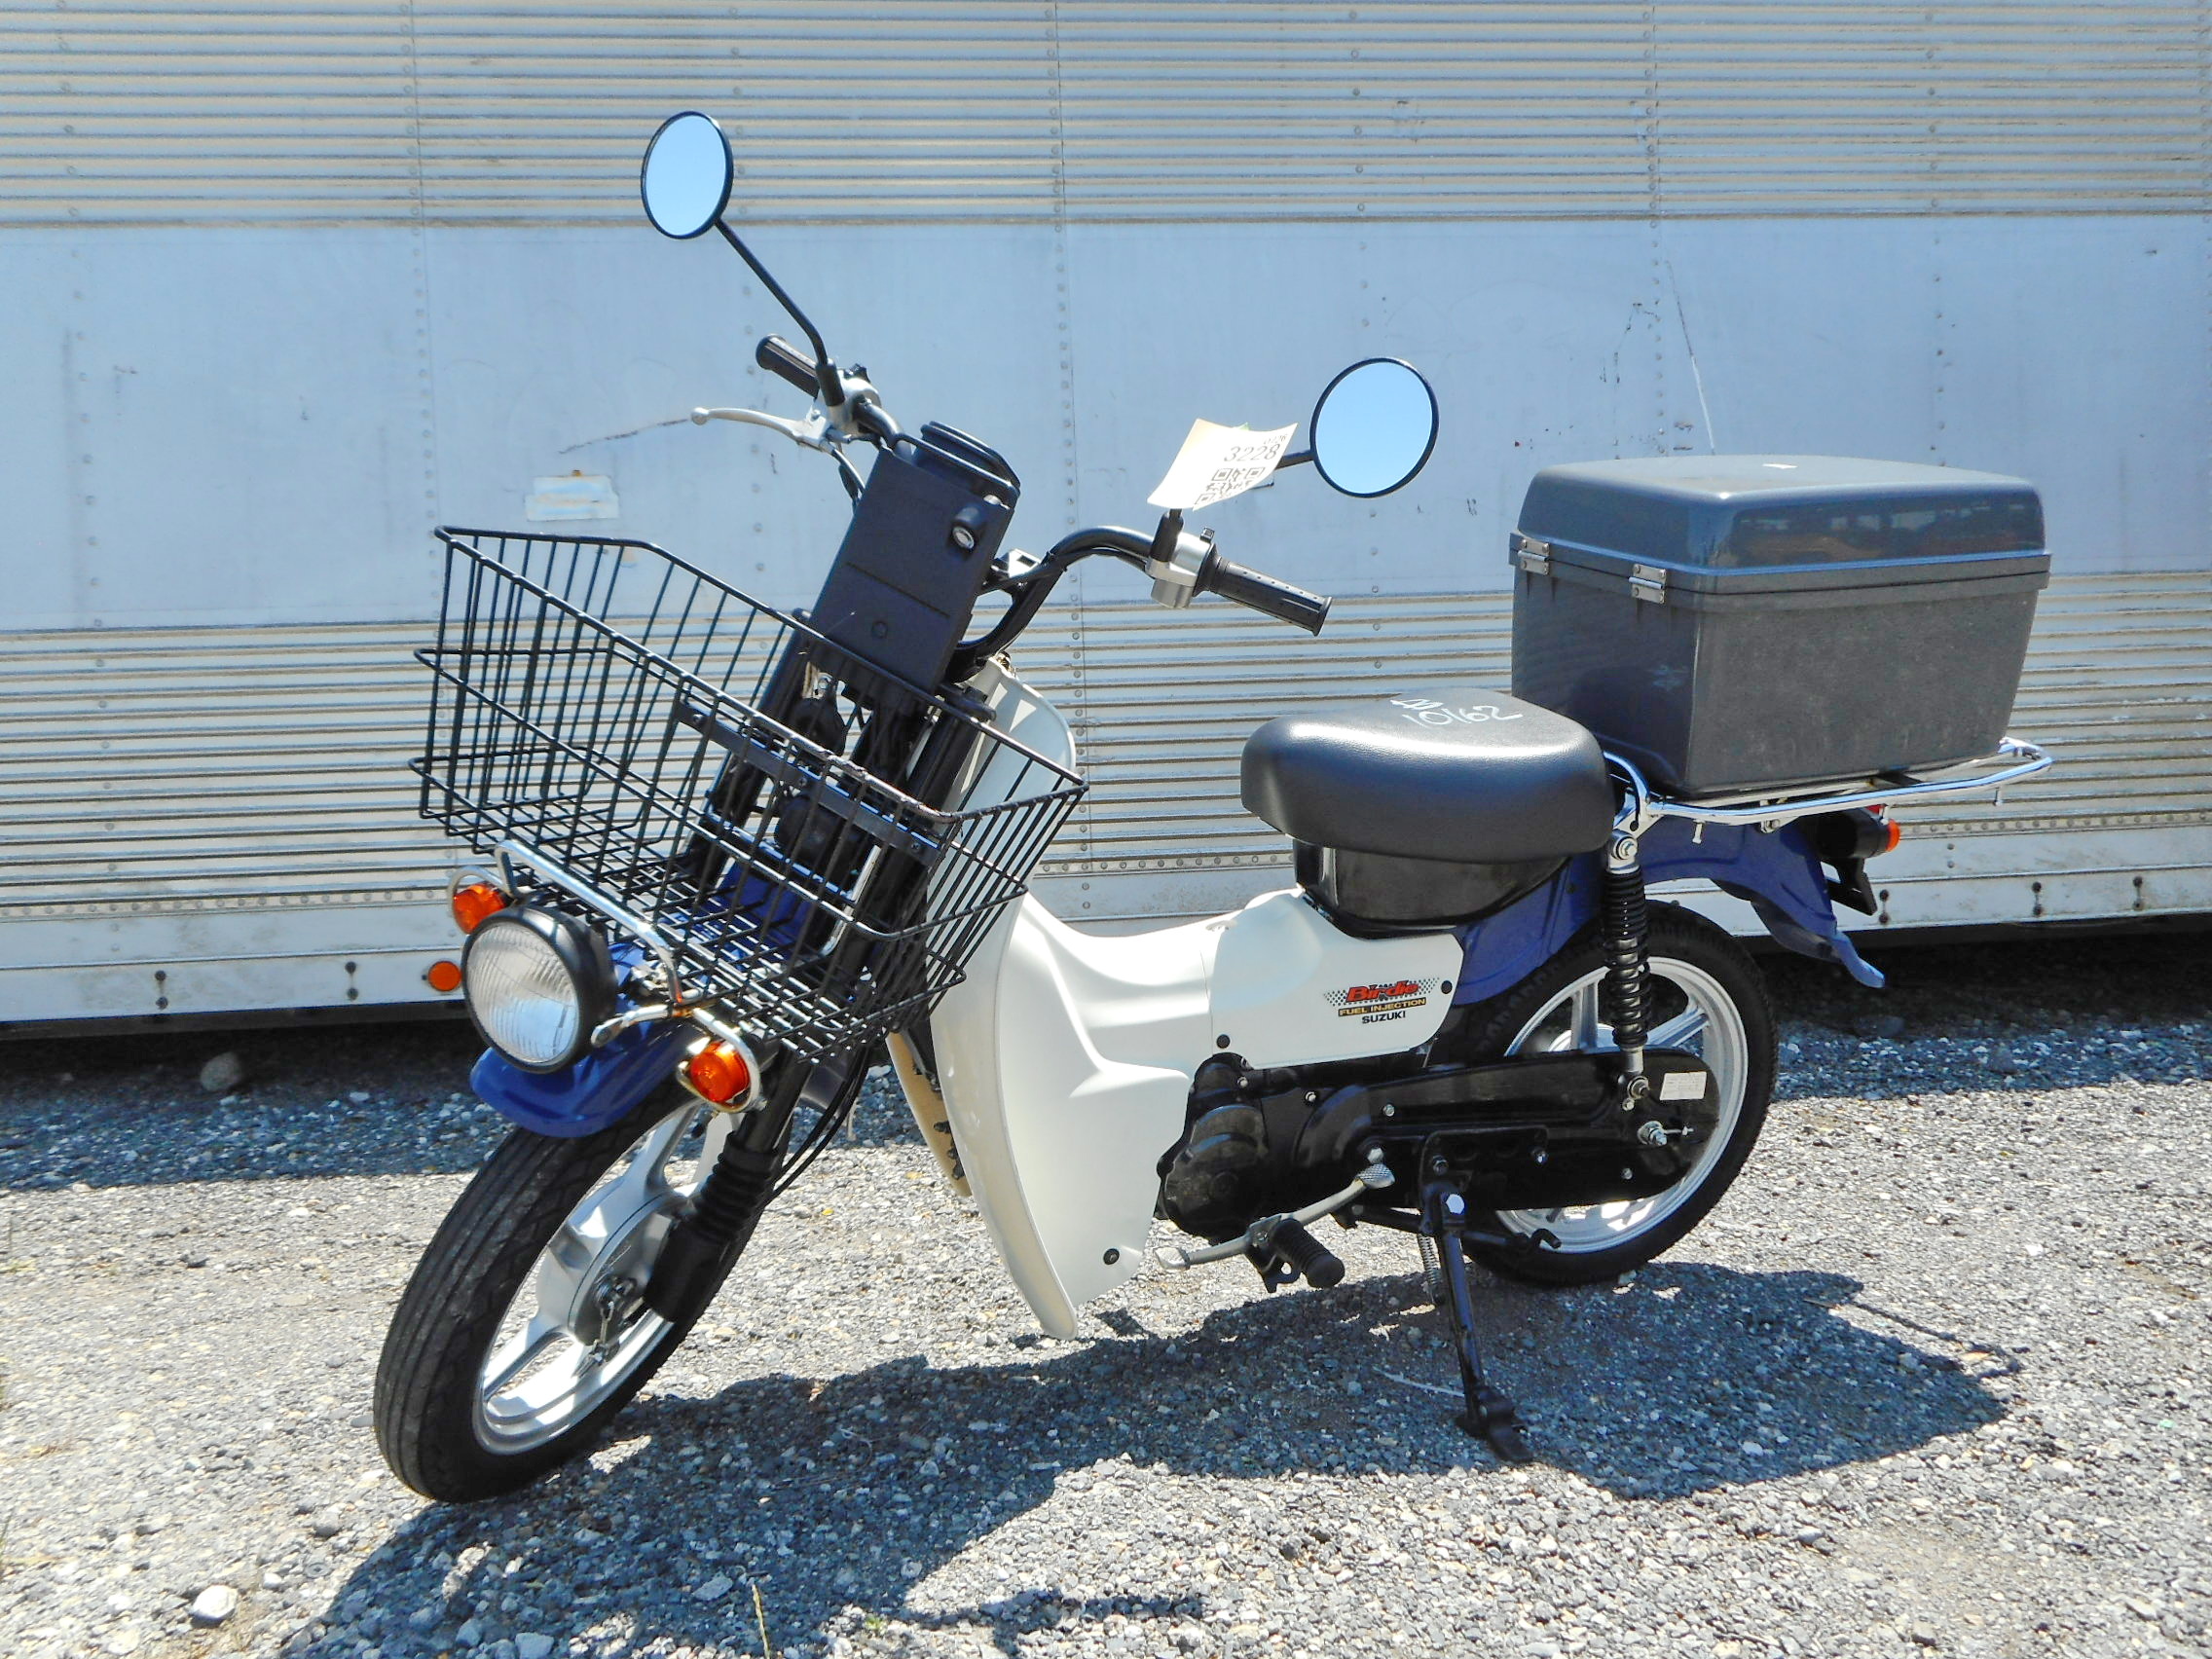 Suzuki m109r: обзор и технические характеристики мотоцикла